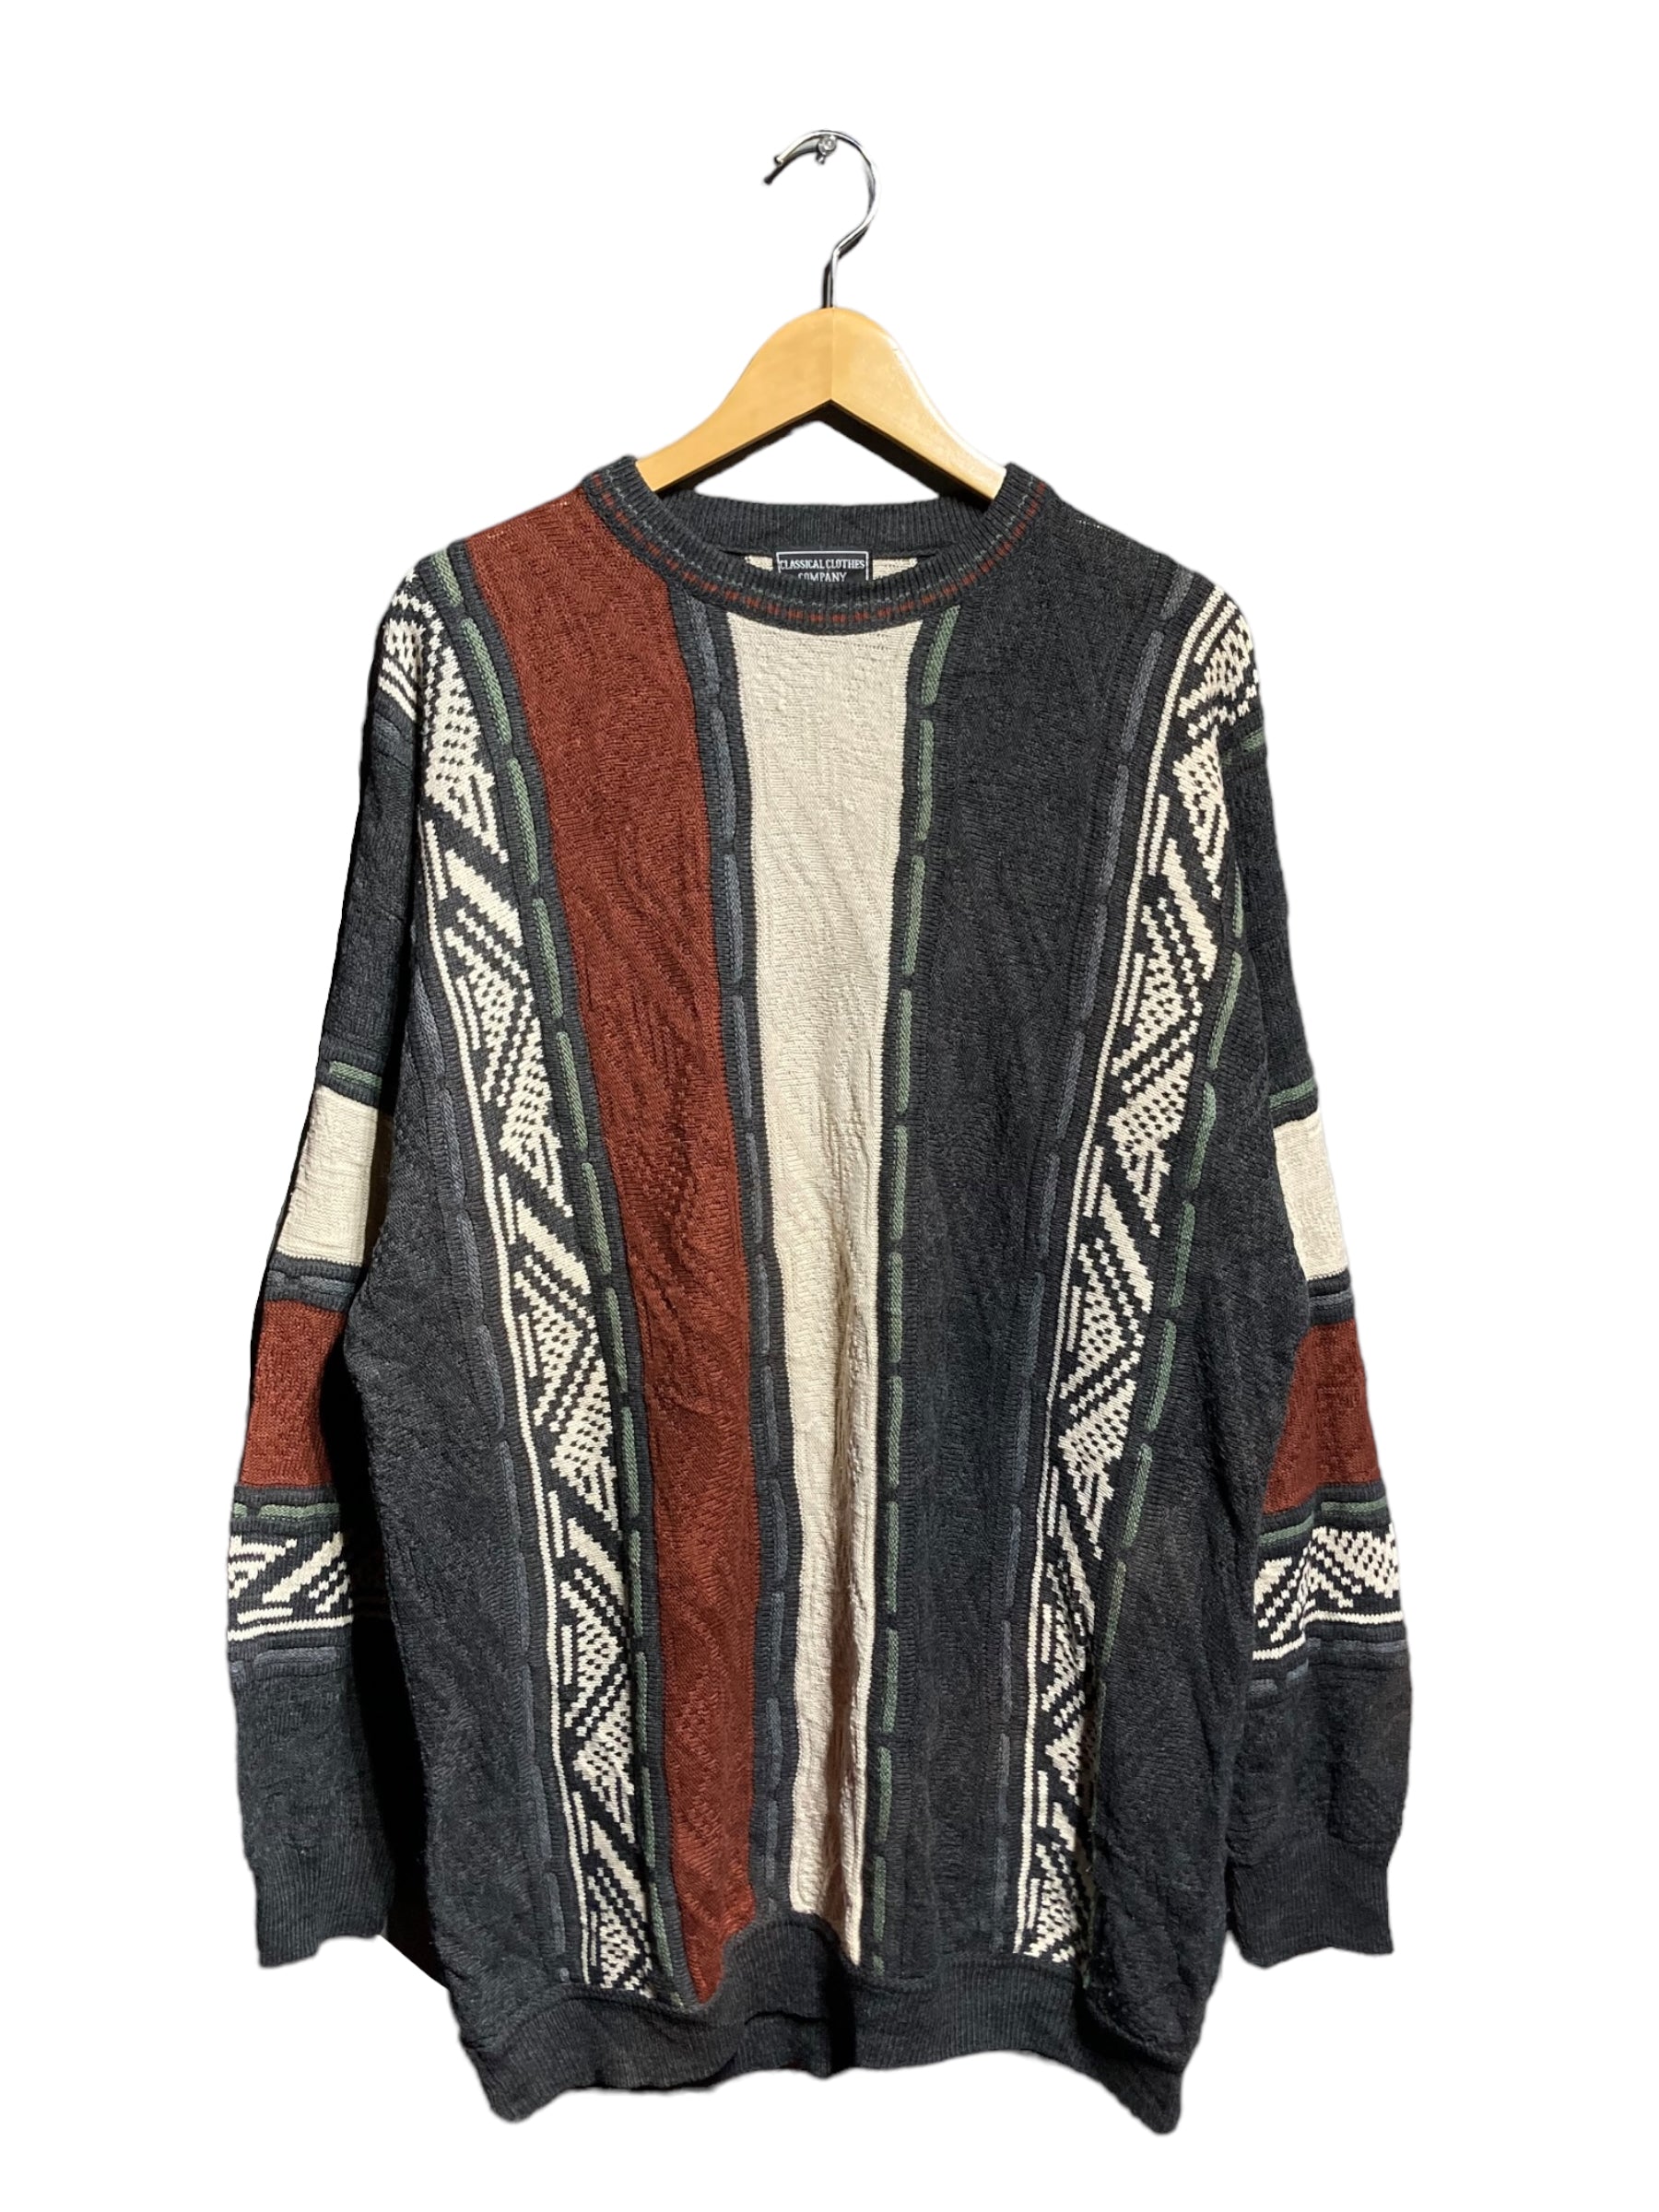 CLASSICAL CLOTHES COMPANY knit sweater 3Dニット ニット セーター